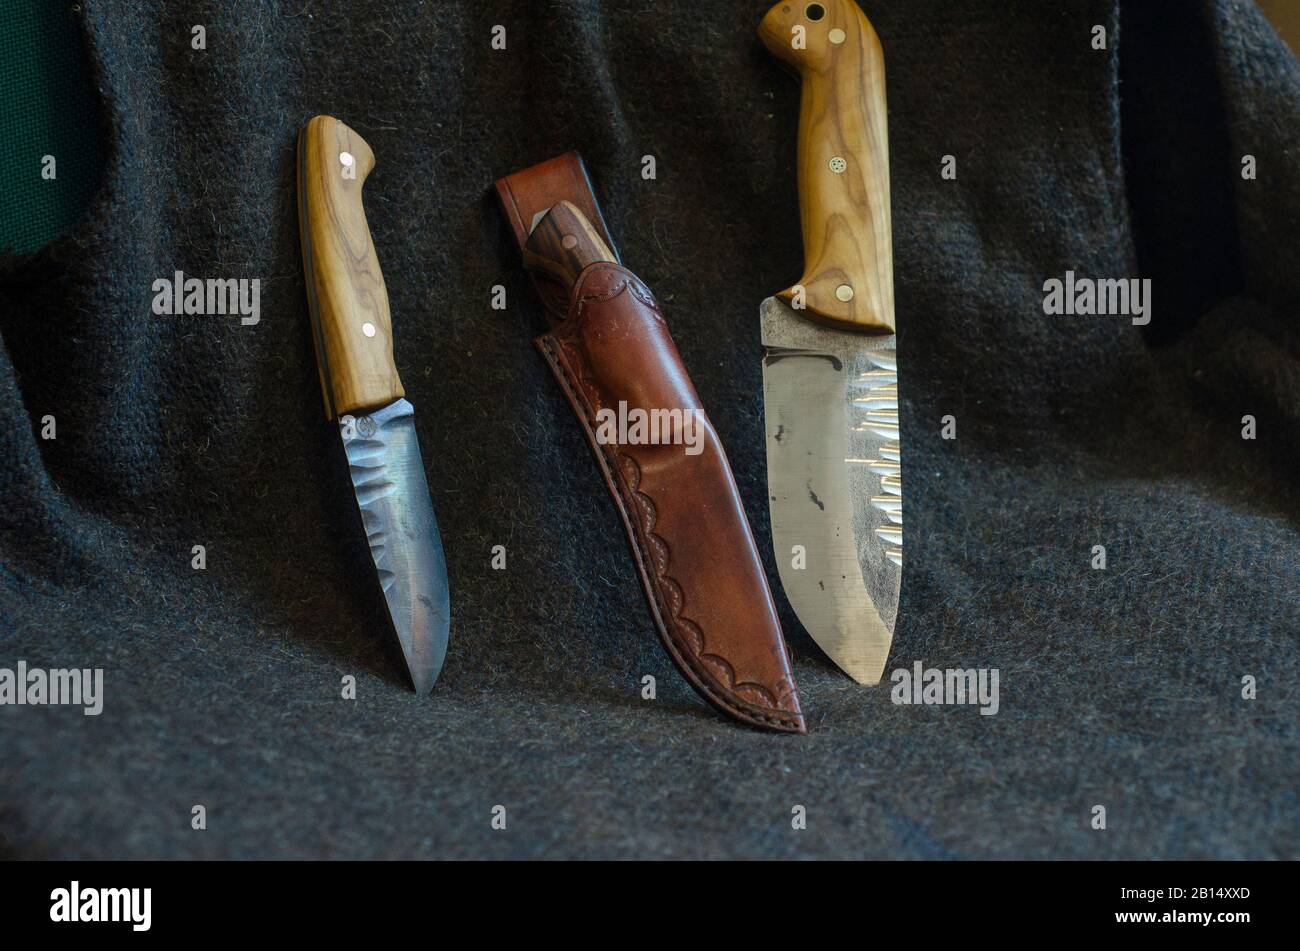 NEW MORAKNIV ASH WOOD BLADES - Knives Illustrated